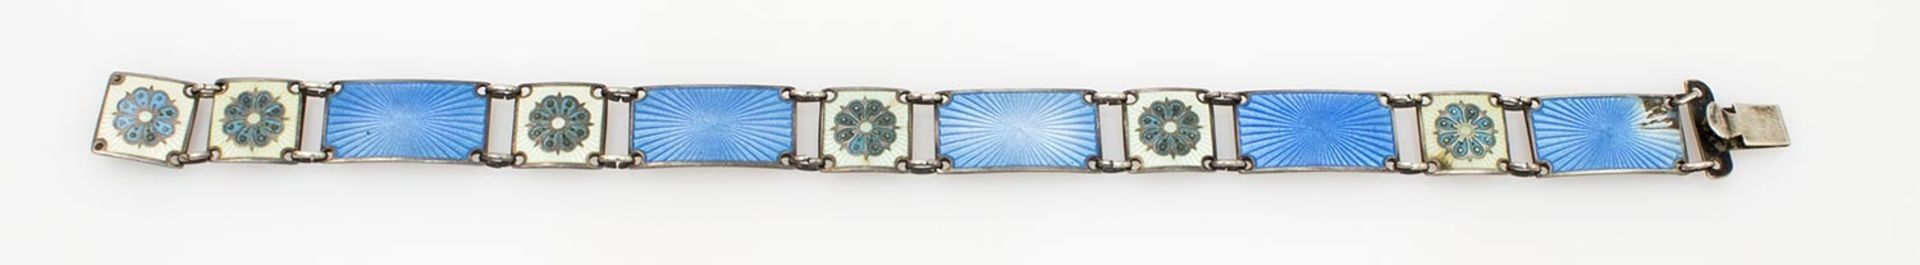 Armband 925er Silber, 13,6 g, eckige Kettenglieder mit Cloisonnétechnik, Steckverschluß, L. 18 cm